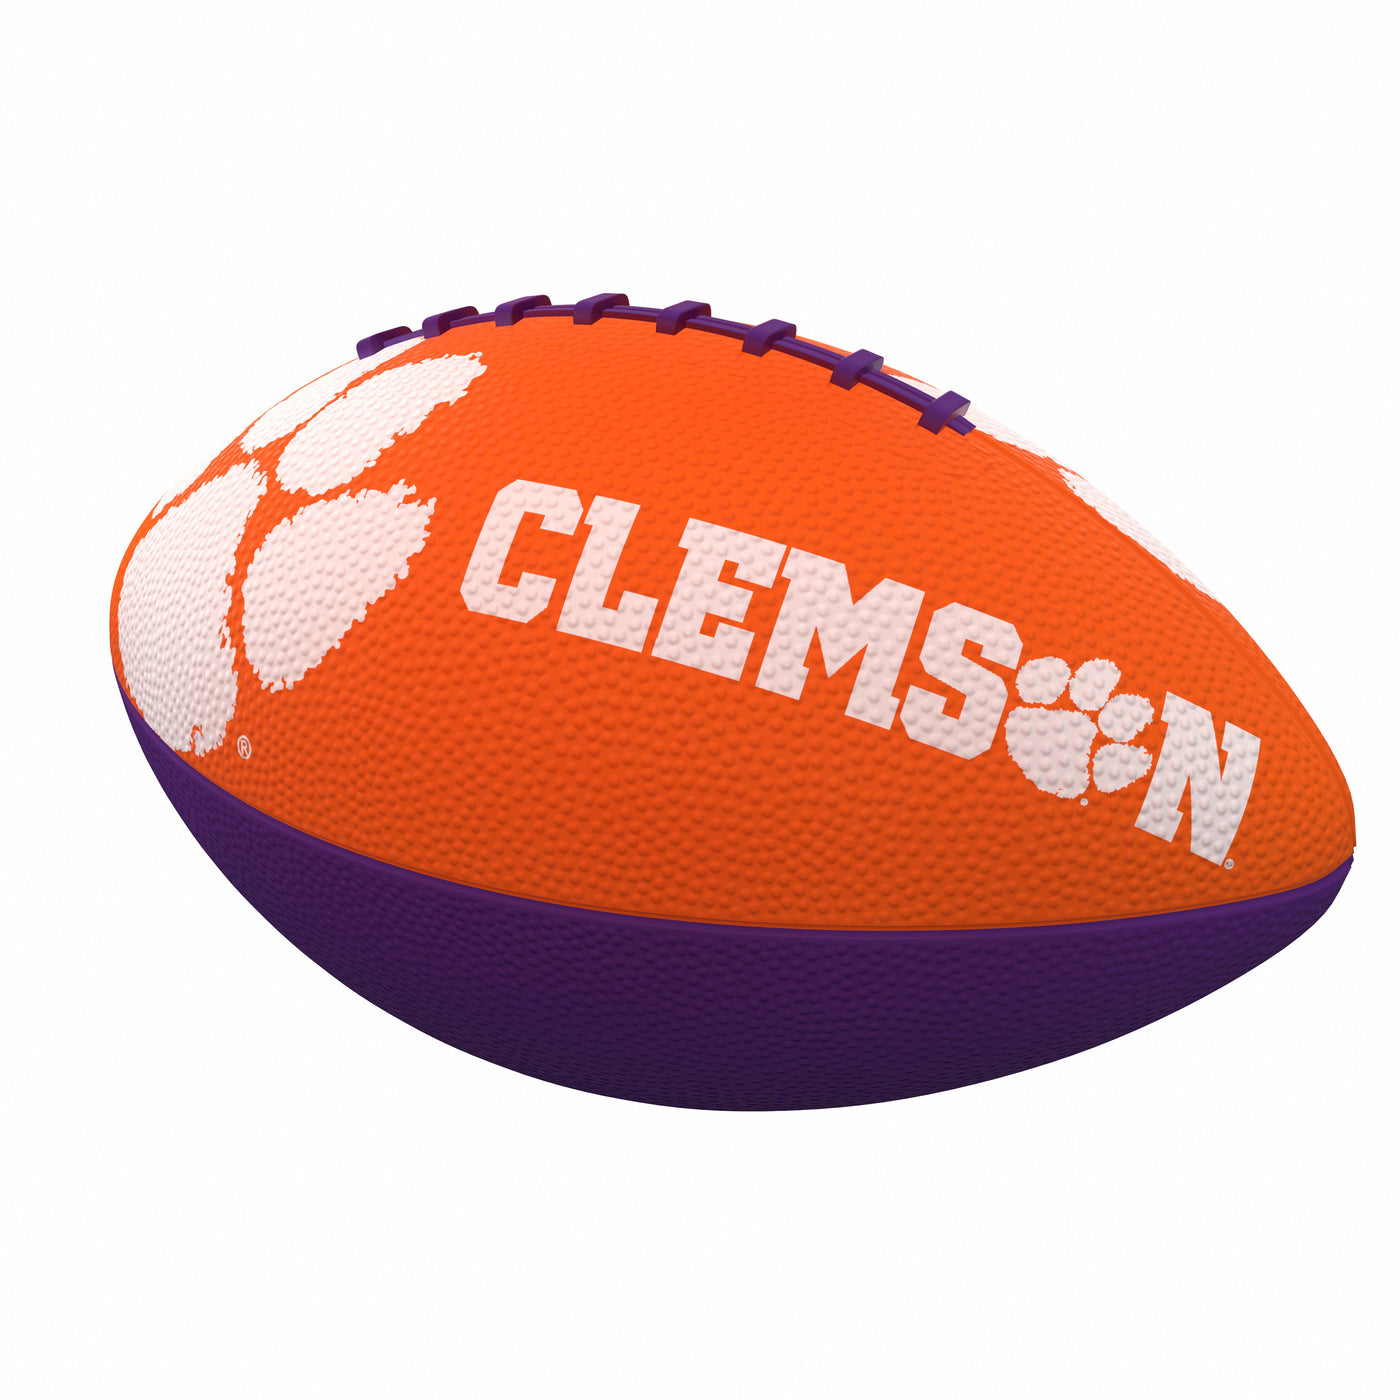 Clemson Combo Logo Junior-Size Rubber Football